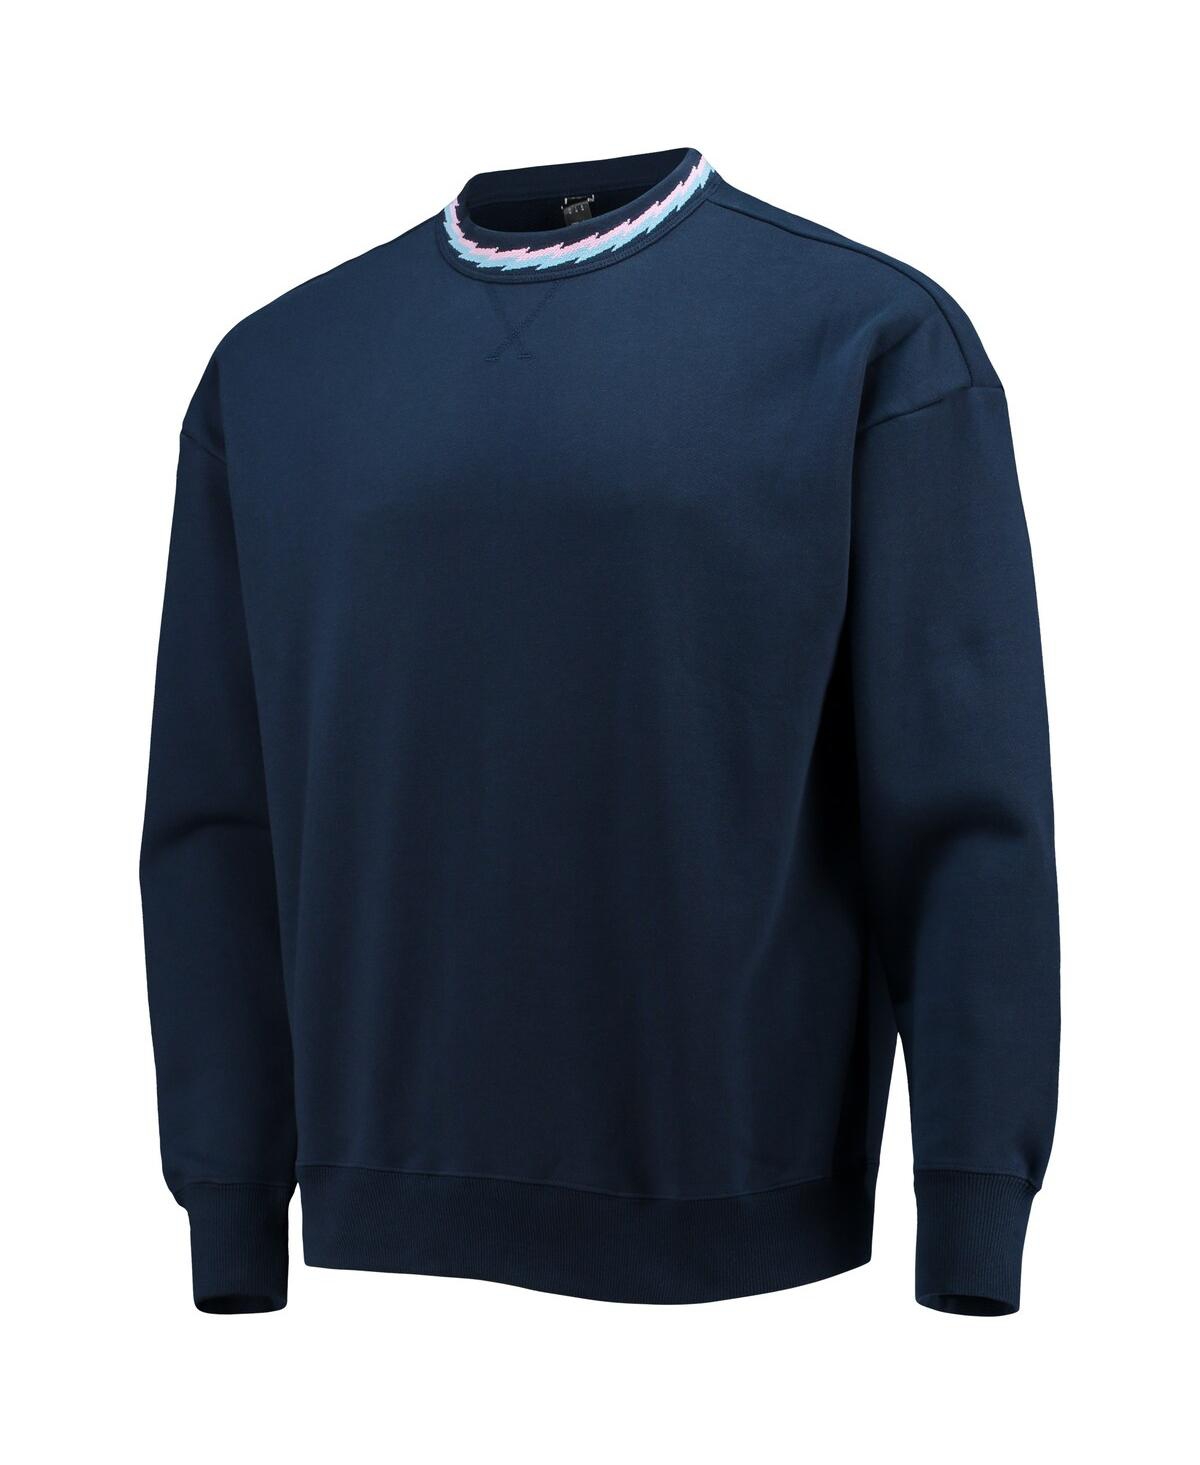 Shop Adidas Originals Men's Adidas Navy Arsenal Lifestyle Pullover Sweatshirt